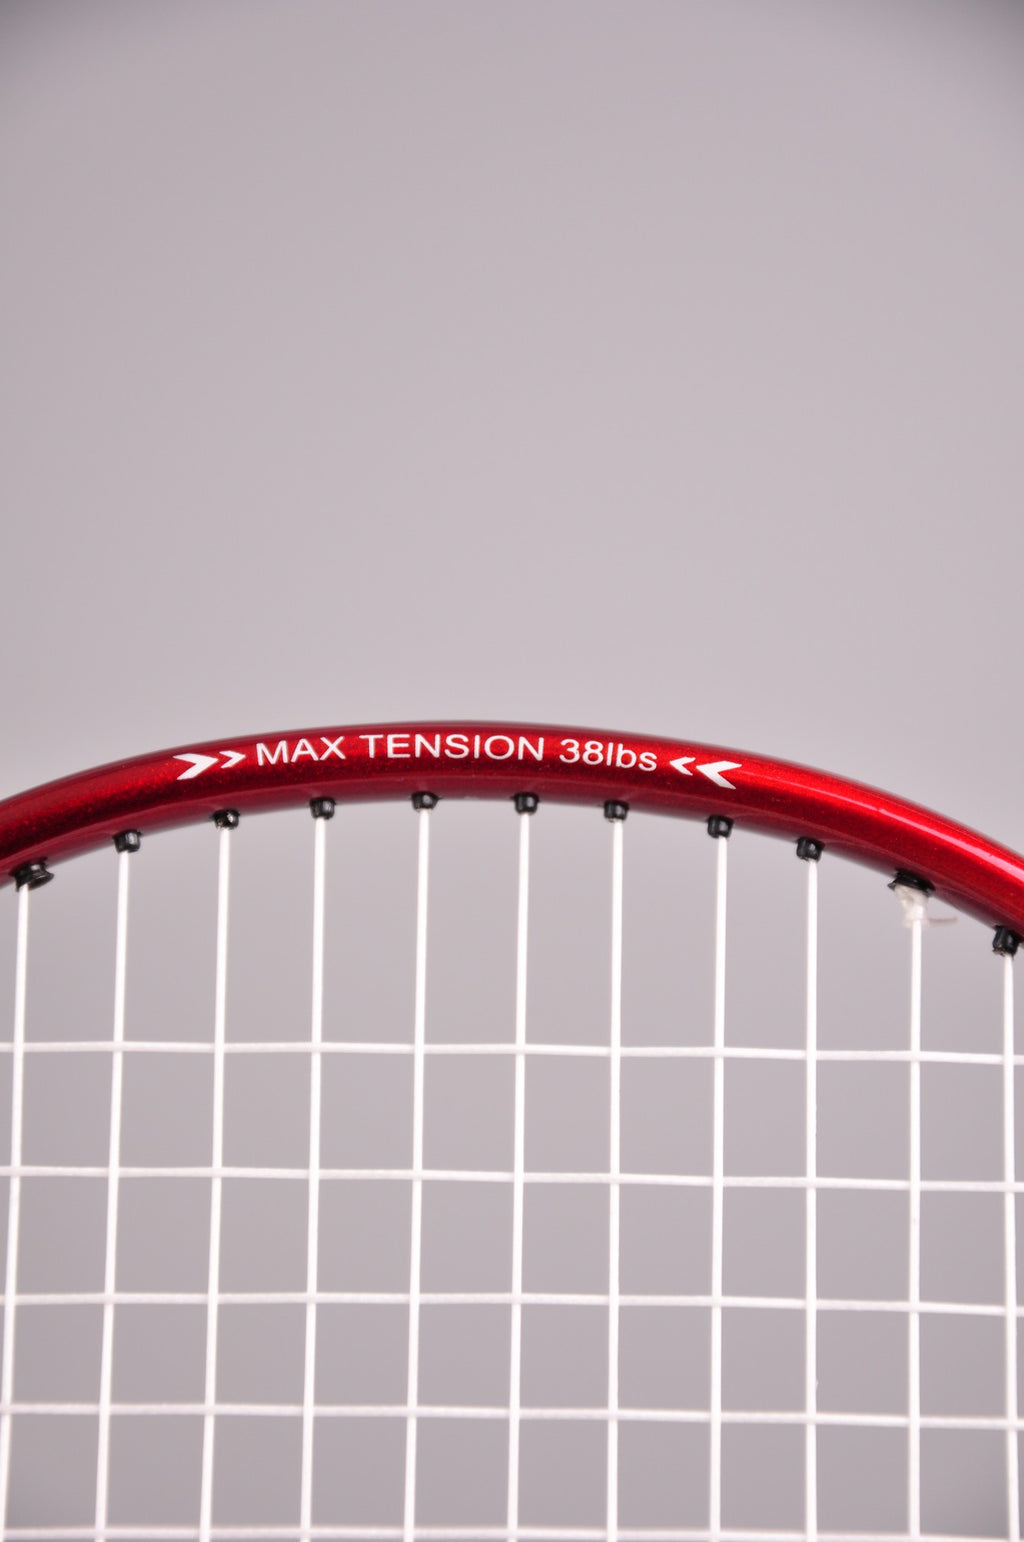 Apacs Edgesaber 10 badminton racket - badminton racket review